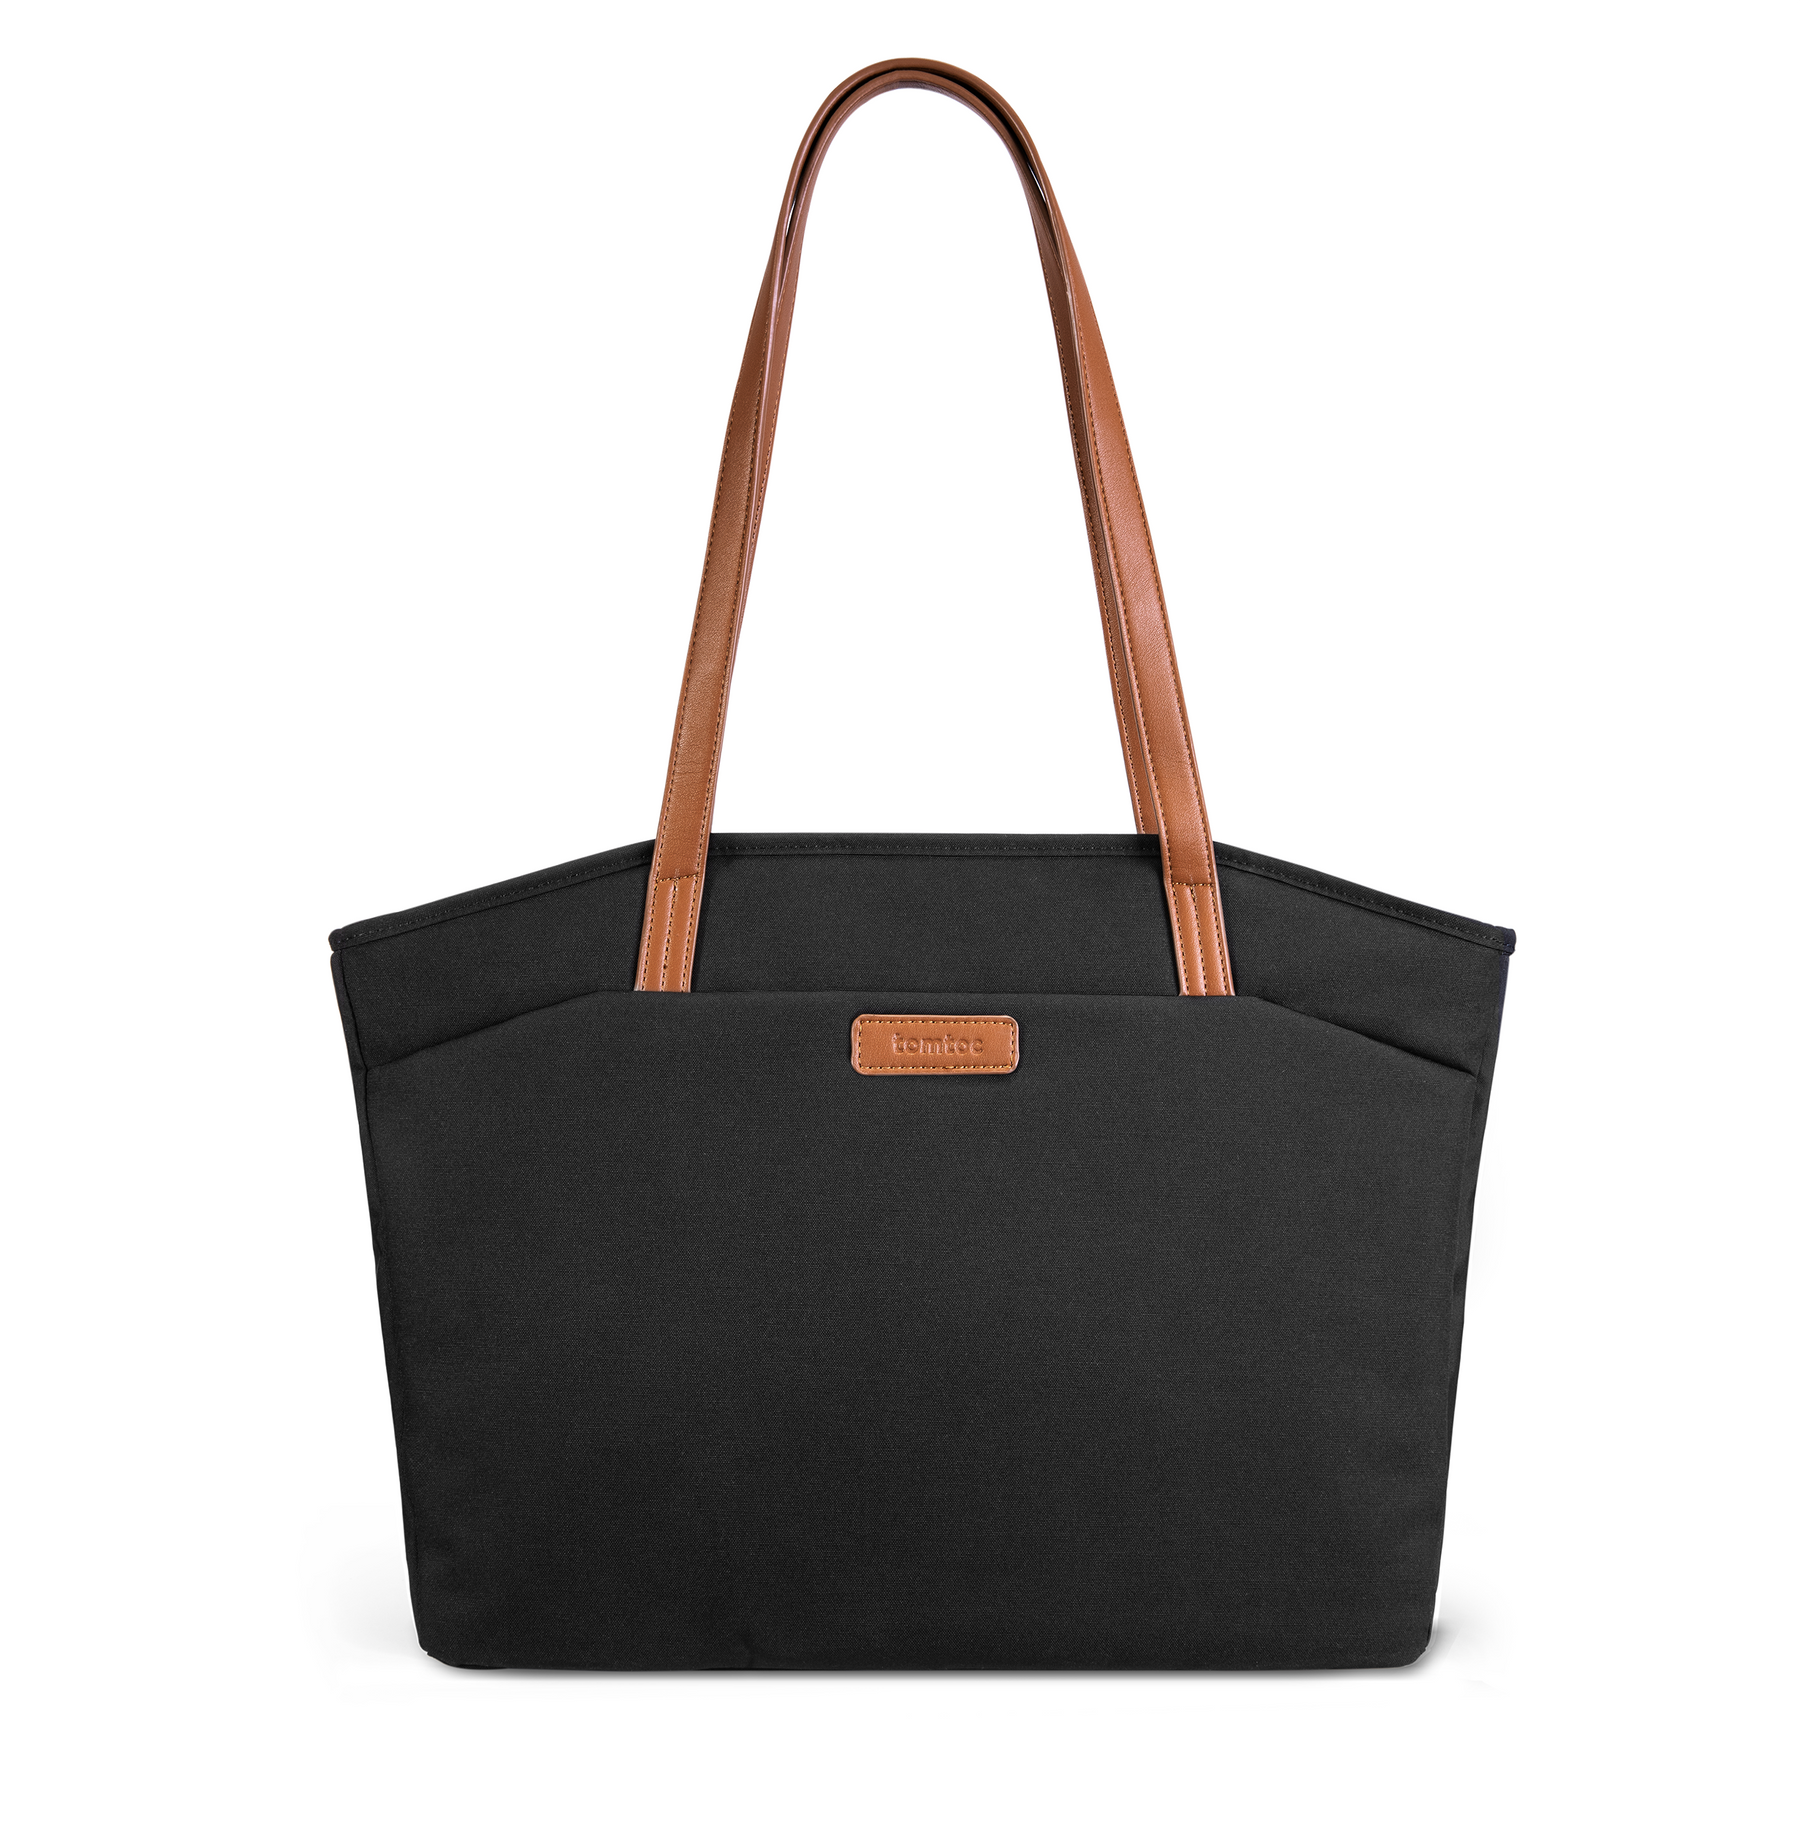 tomtoc 14 Inch Lady Laptop / Tote Bag / Women Bag / Ladies Bag - Black